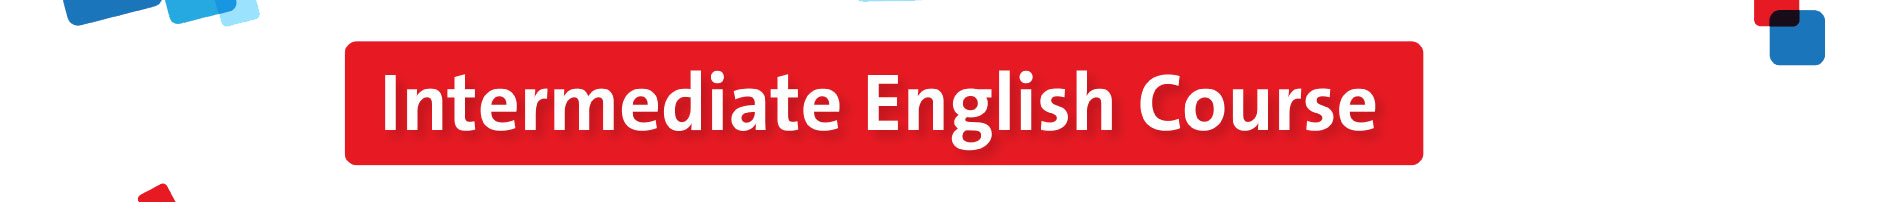 Intermediate English Course Online